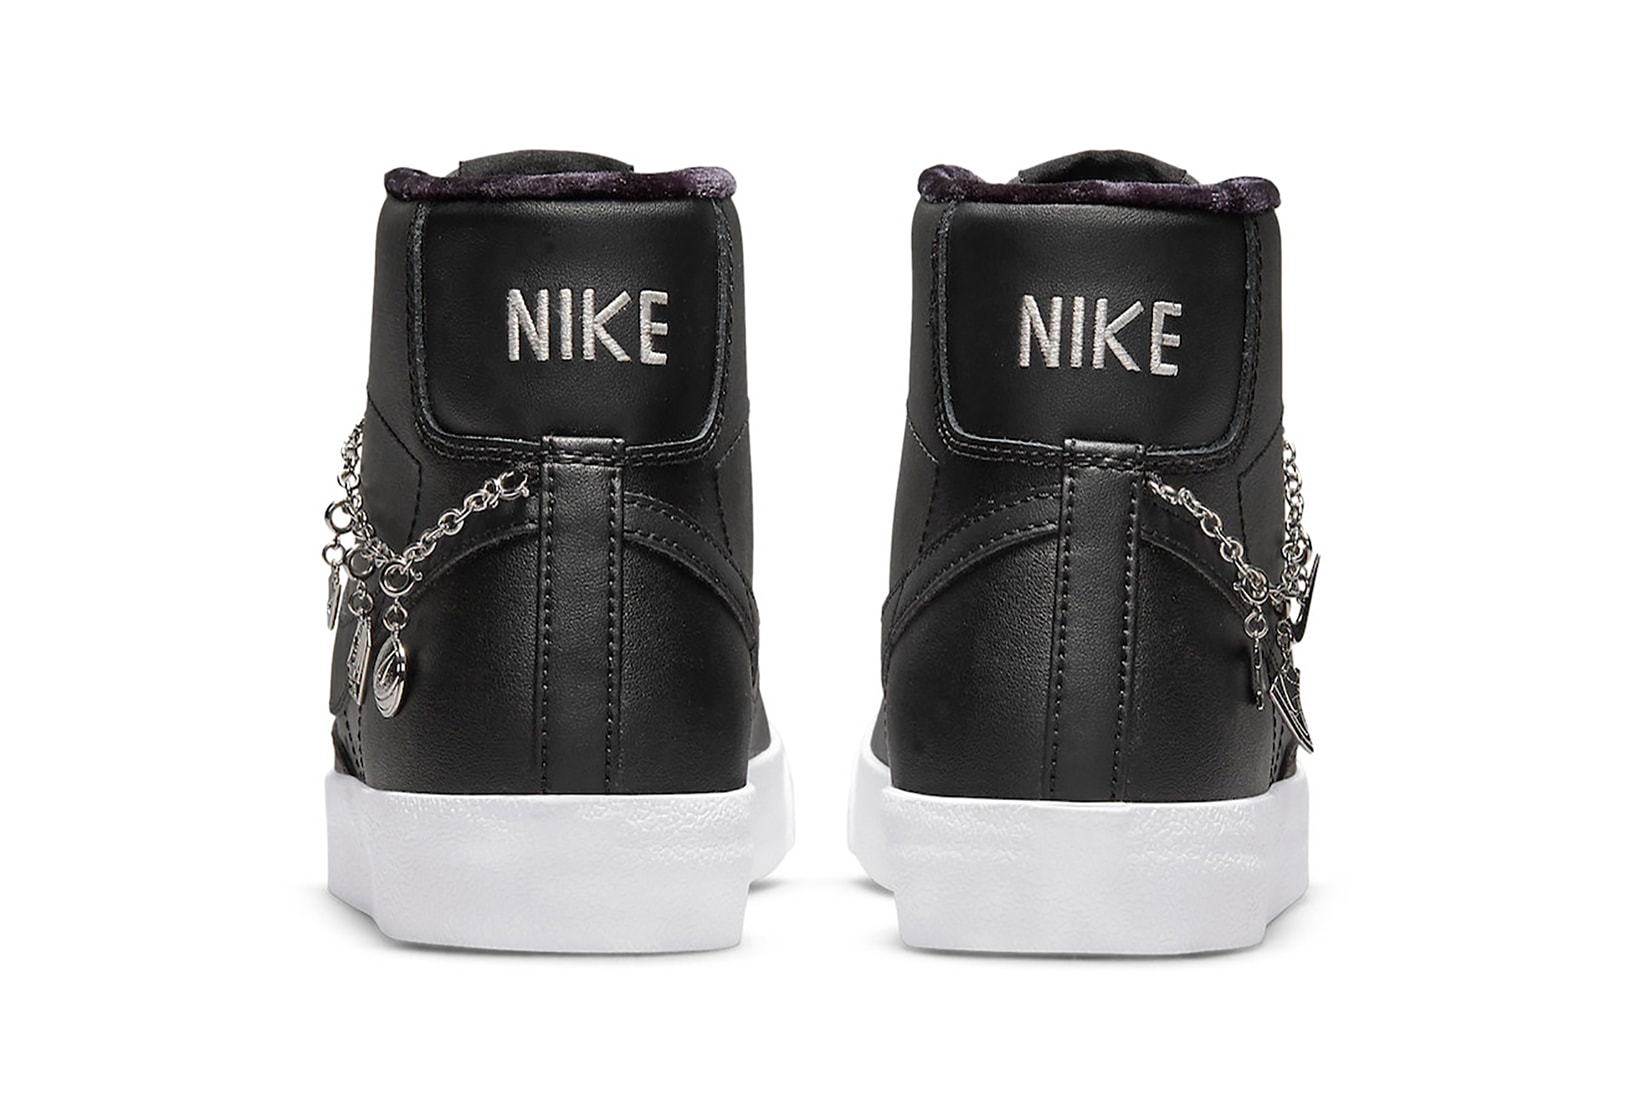 Nike Blazer Mid Lucky Charms Black Metallic Silver Sneakers Footwear Shoes Kicks Heels